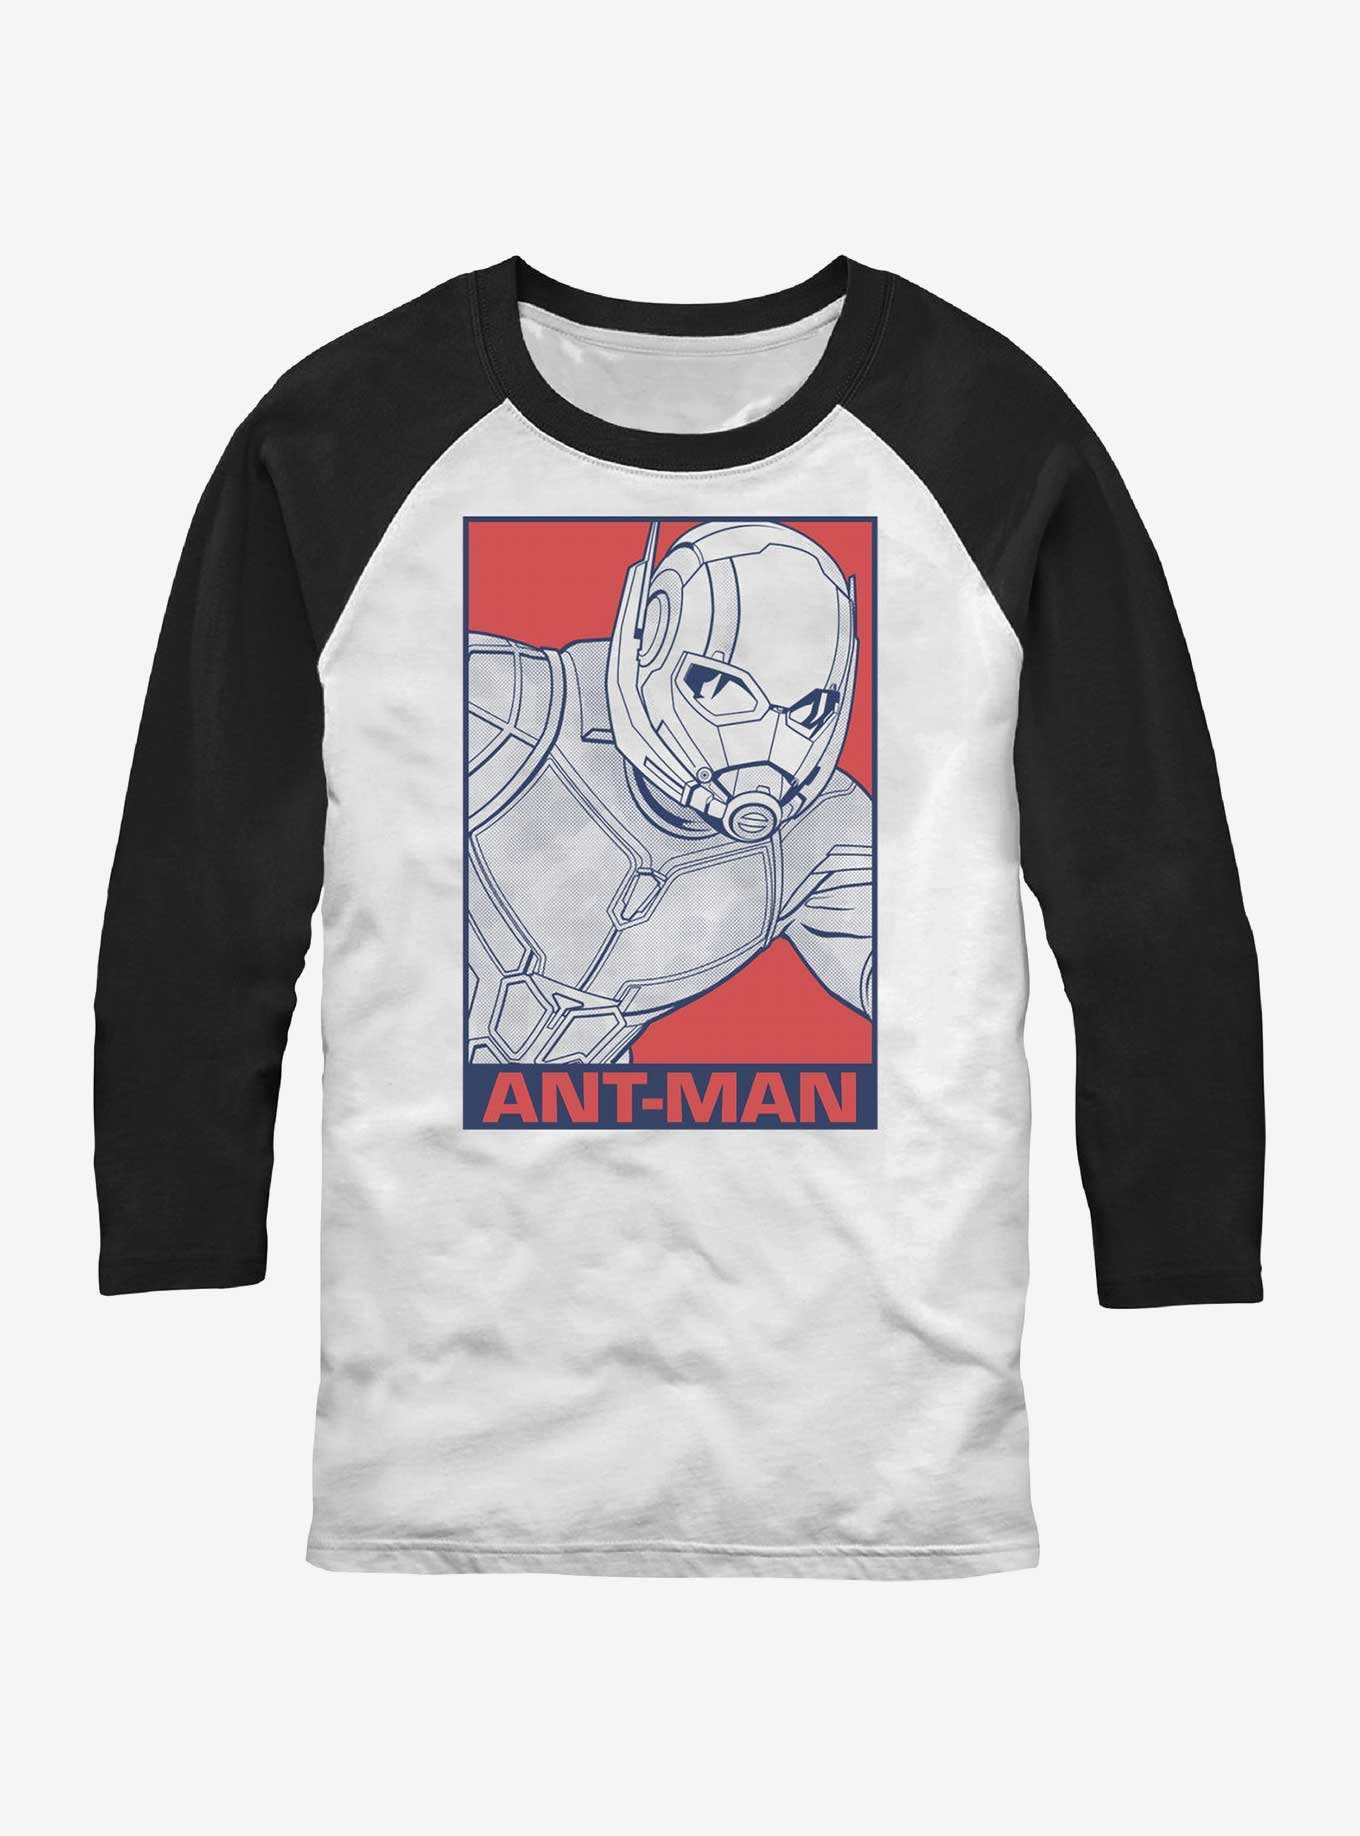 Marvel Ant-Man and the Wasp: Quantumania Pop Art Ant-Man Poster Raglan T-Shirt, , hi-res